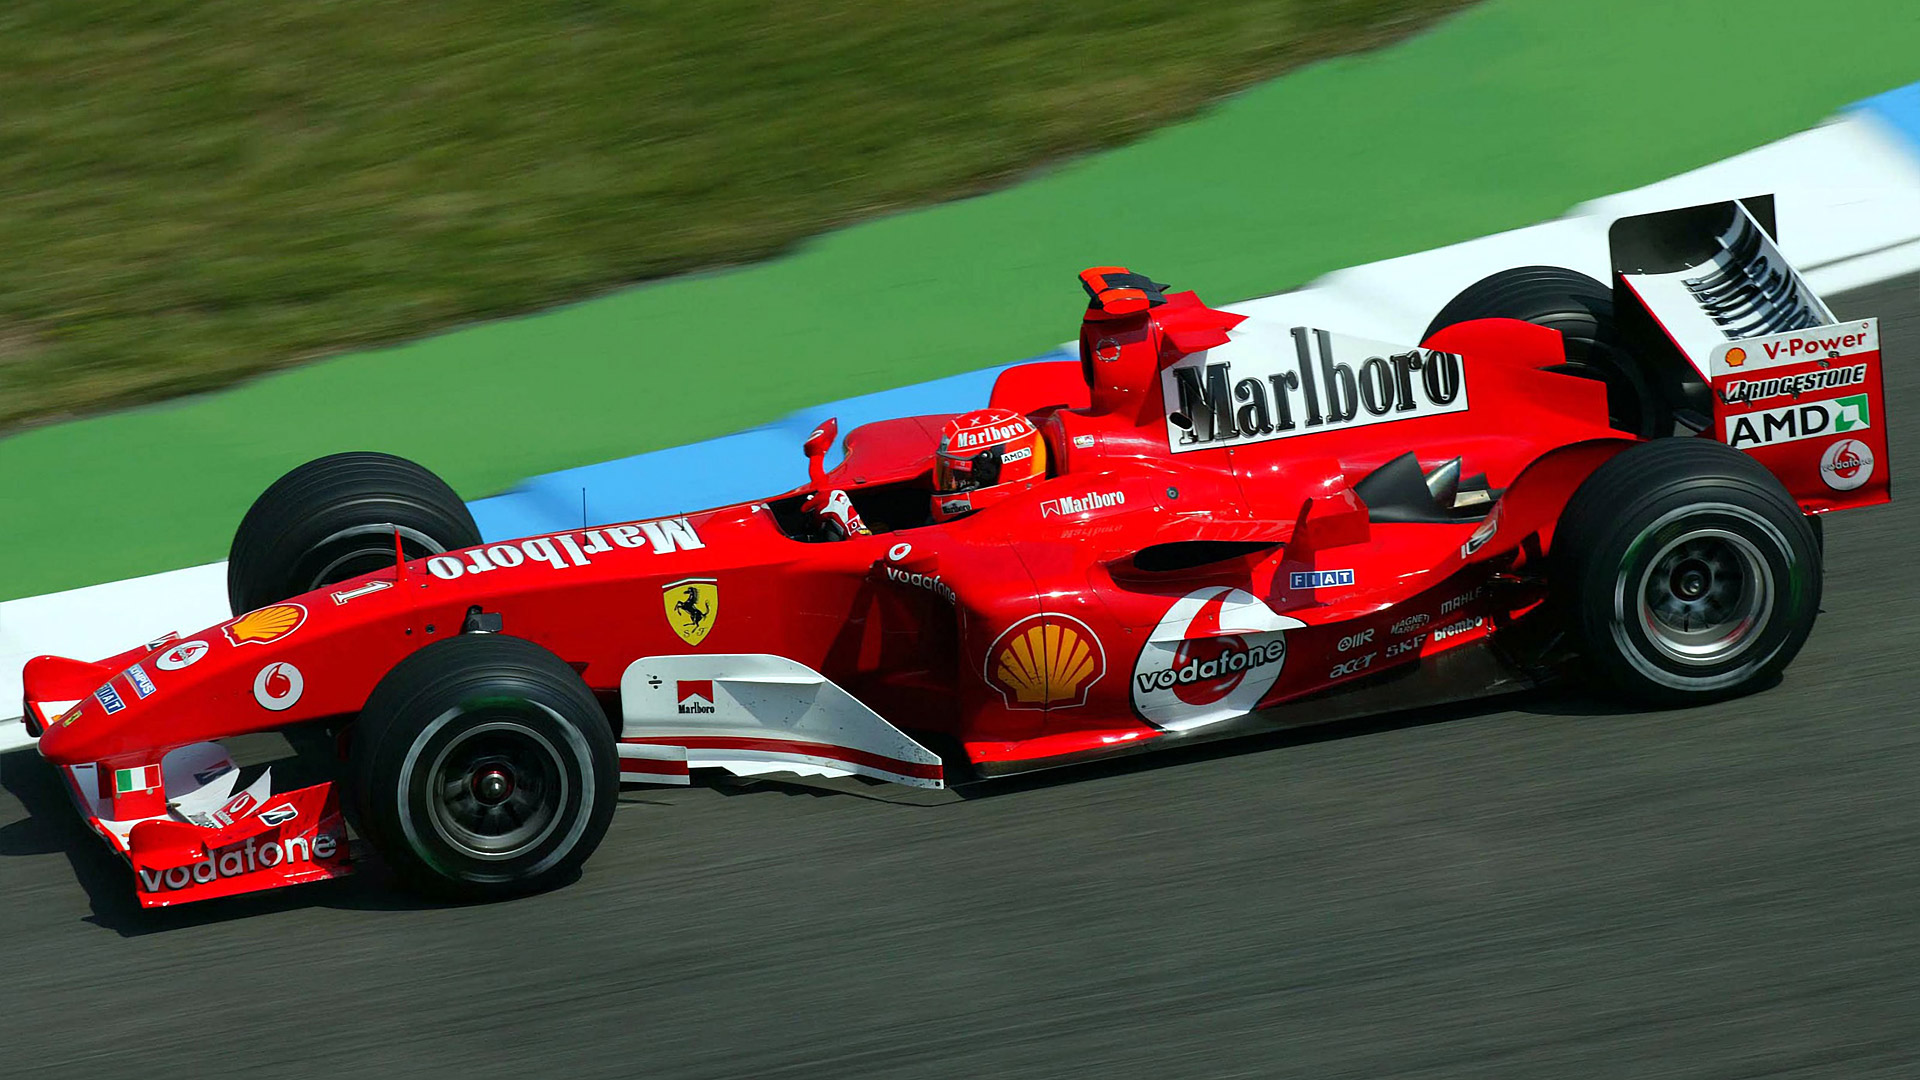  2004 Ferrari F2004 Wallpaper.